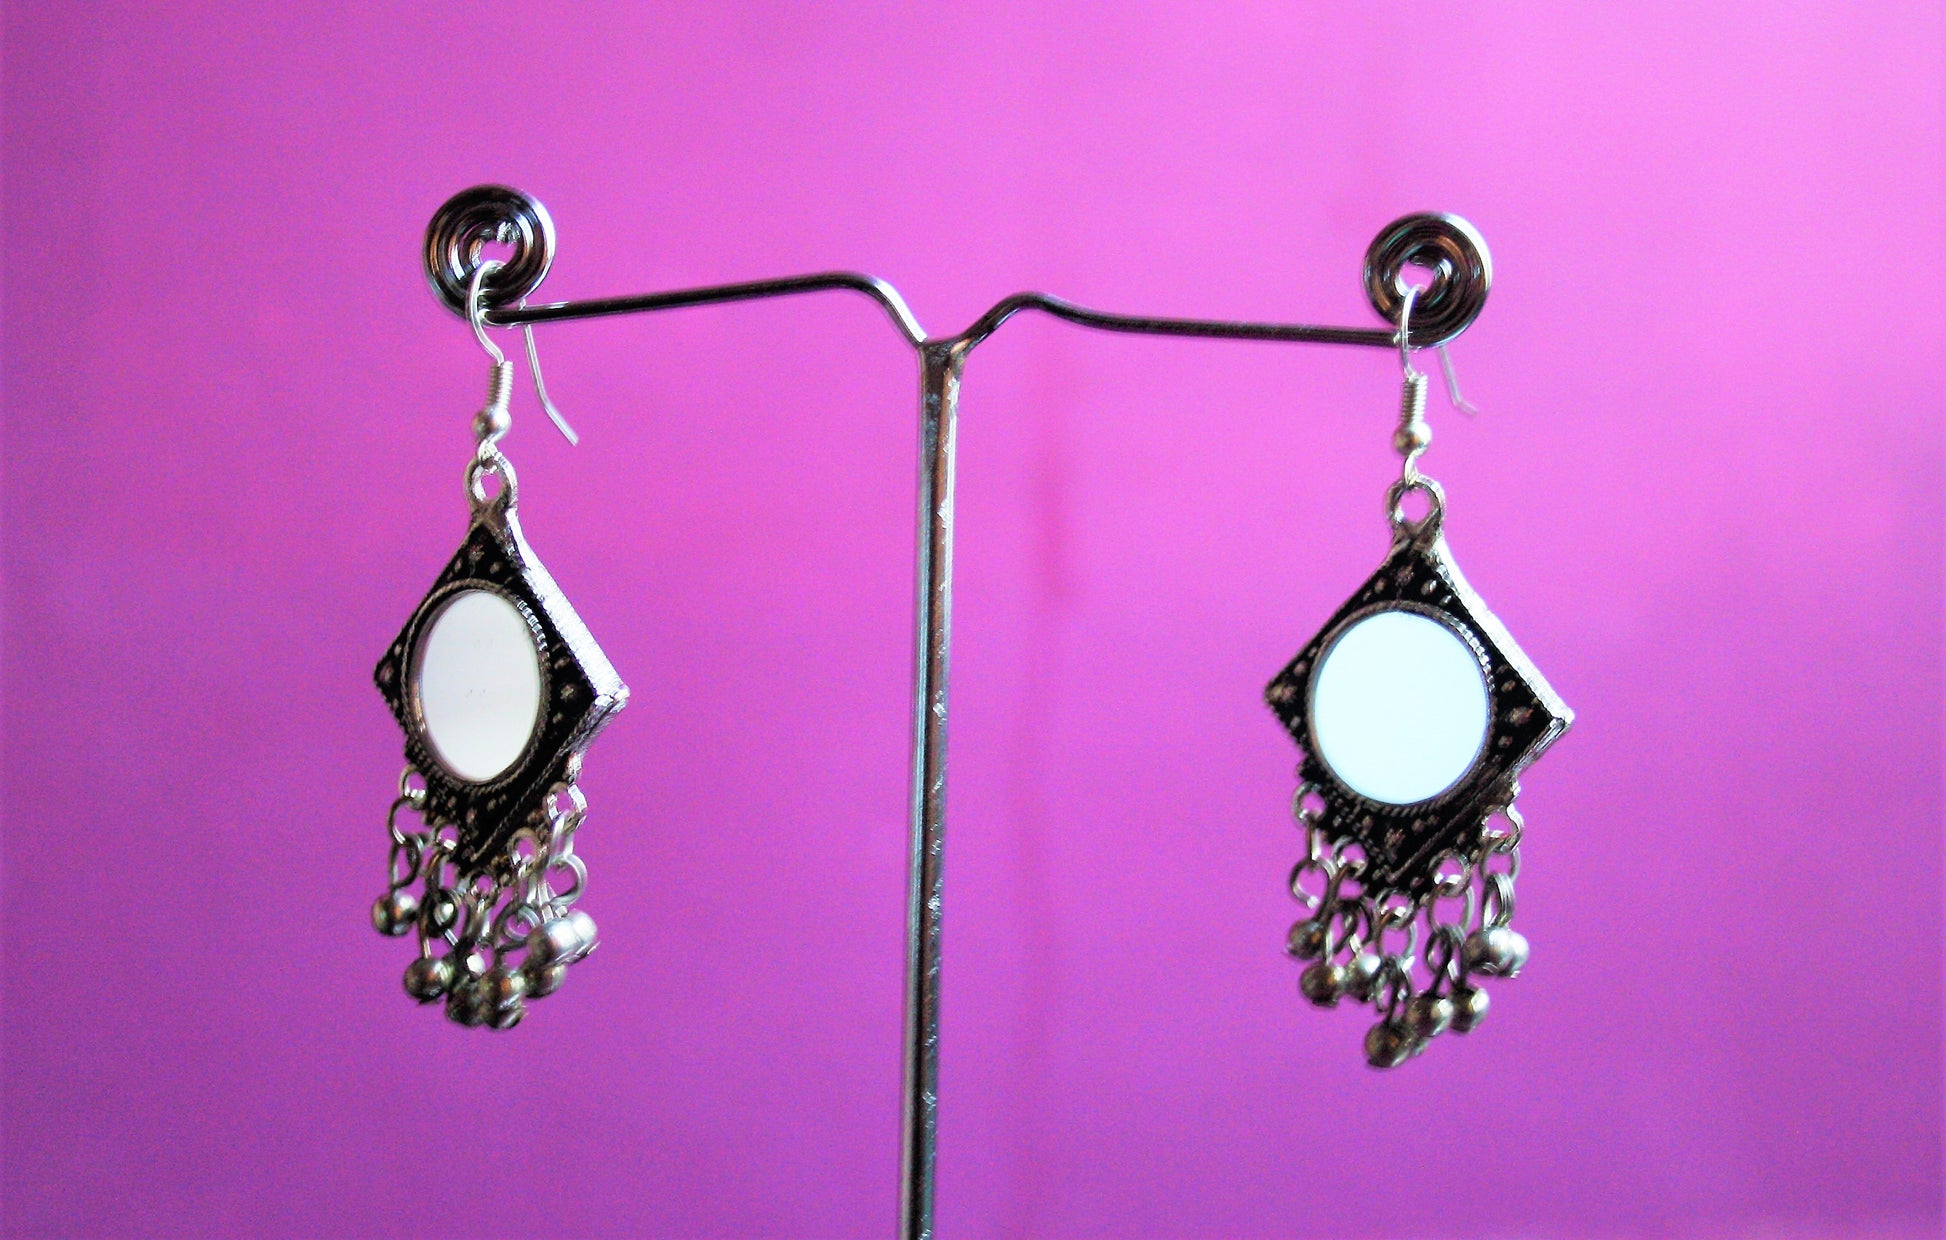 Short Mirror Earrings with Beads - GlitterGleam